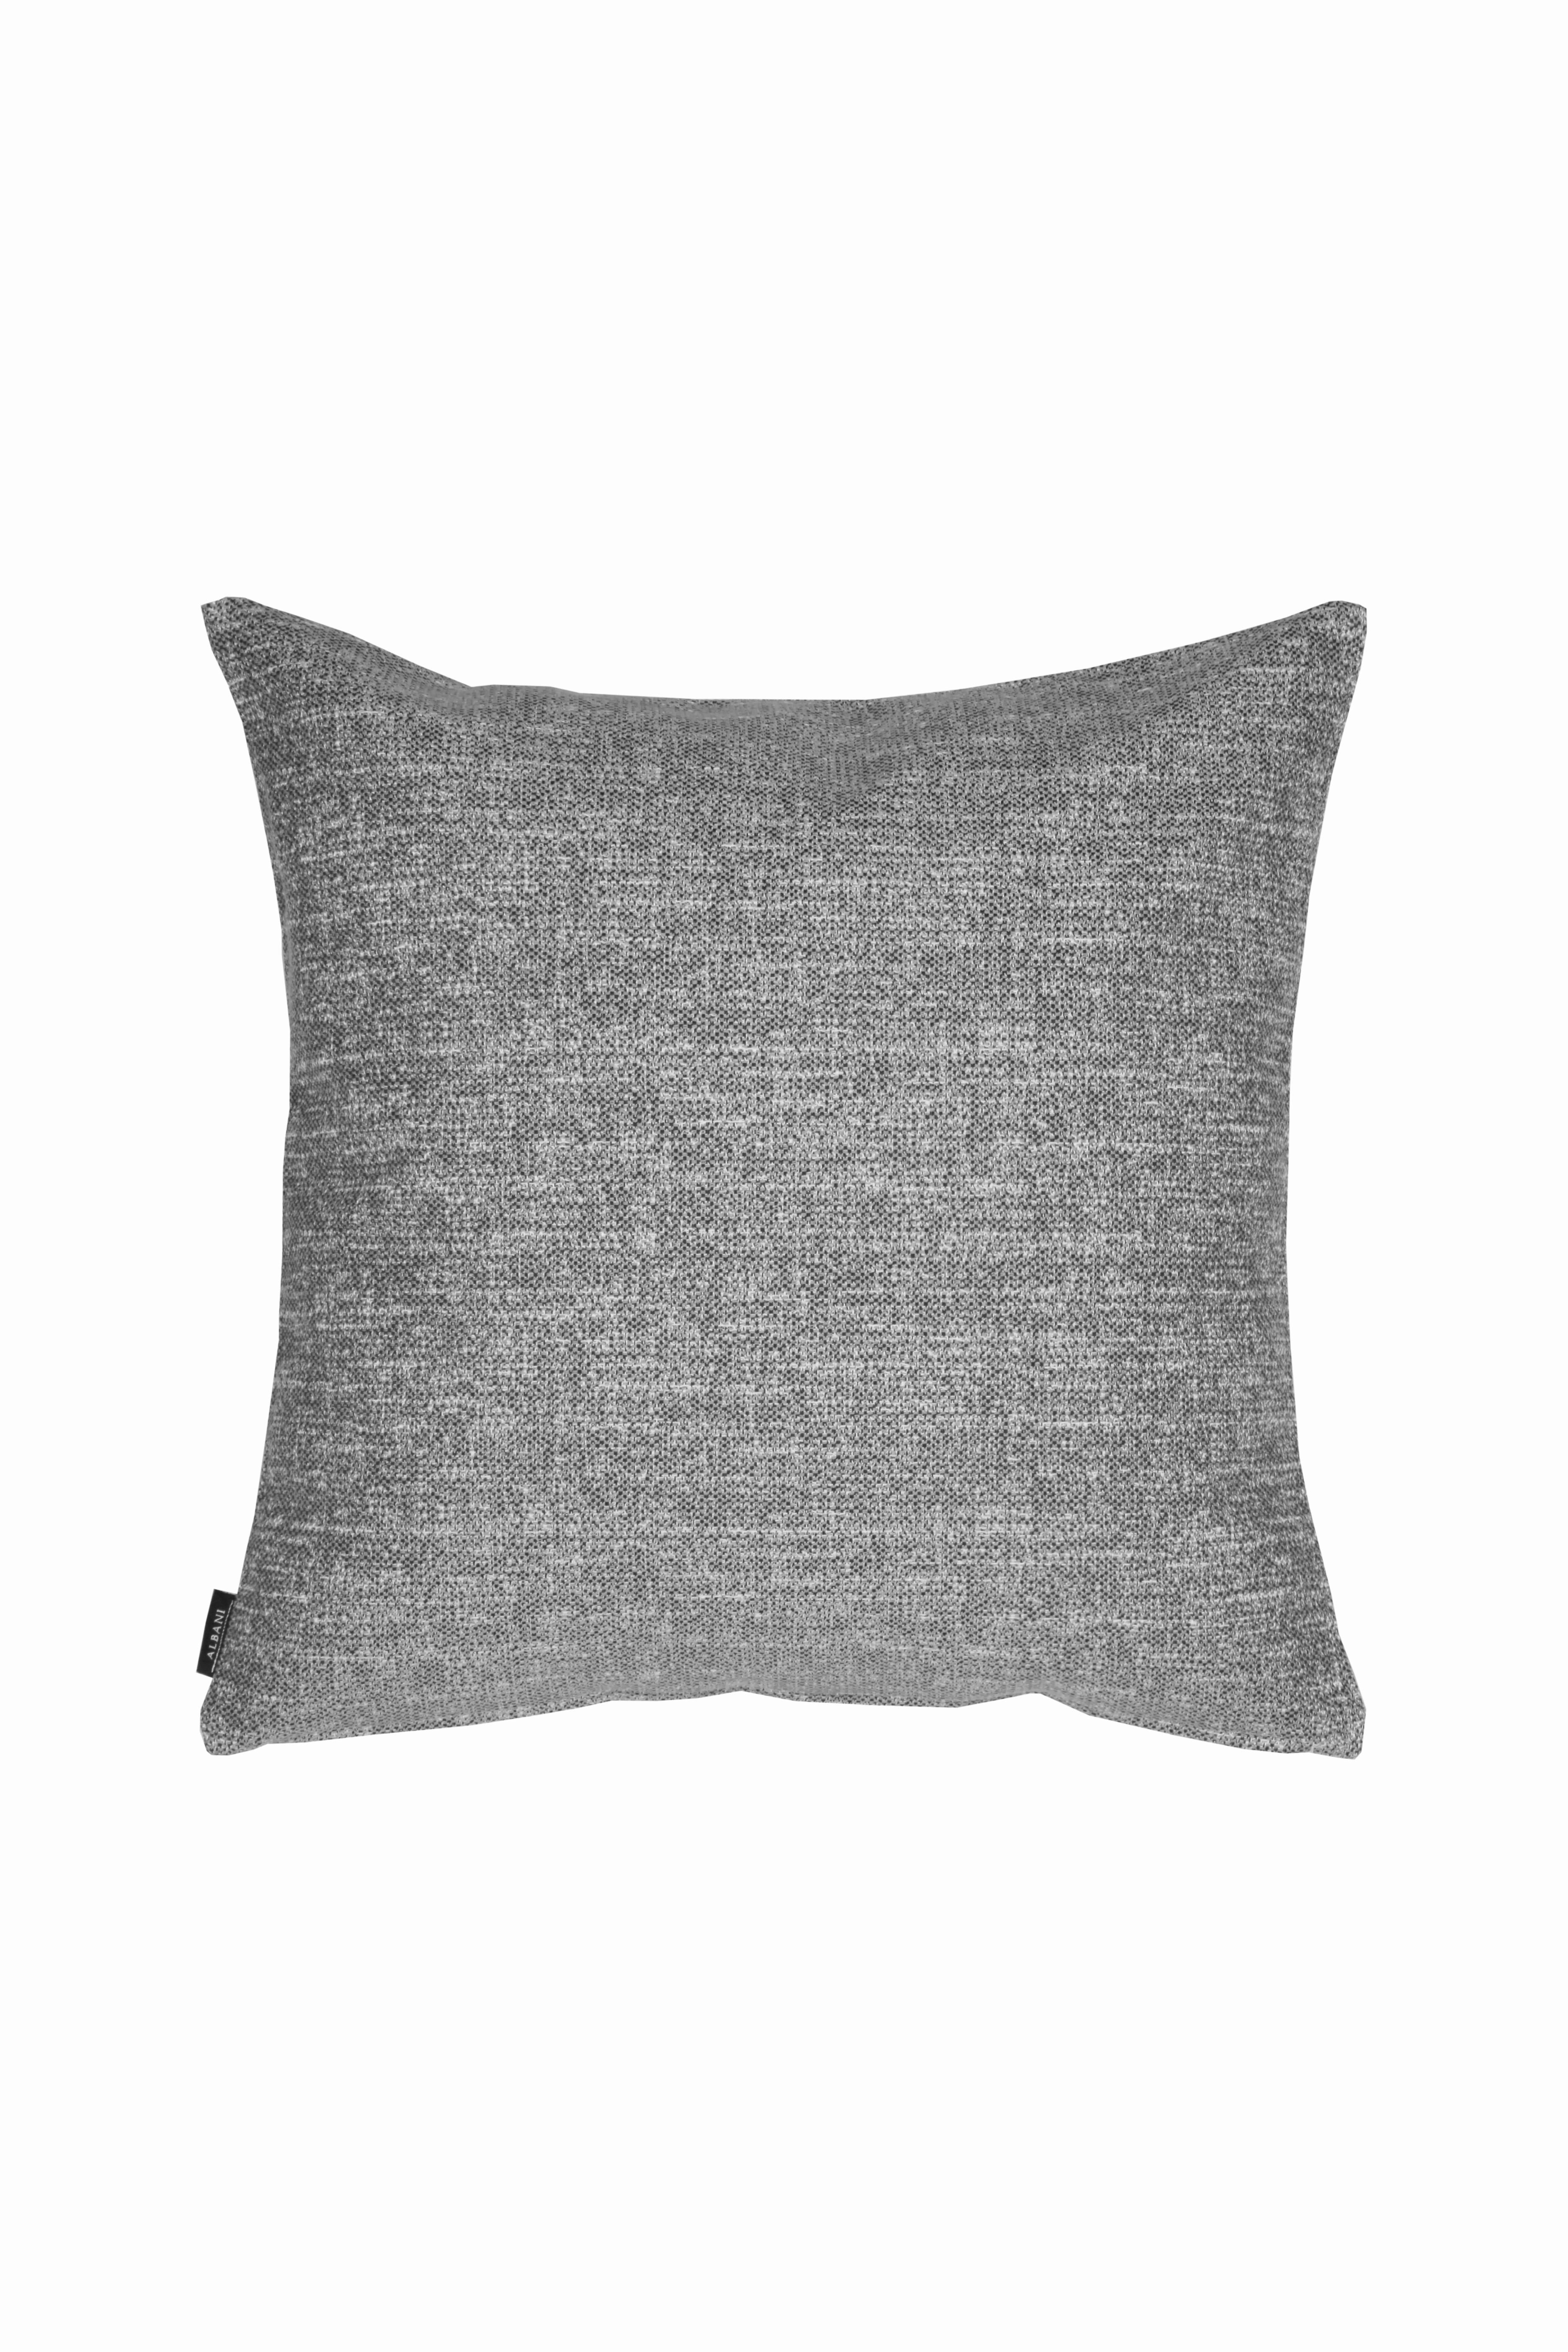 KISSENHÜLLE Korfu  - Grau, Basics, Textil (48/48cm)